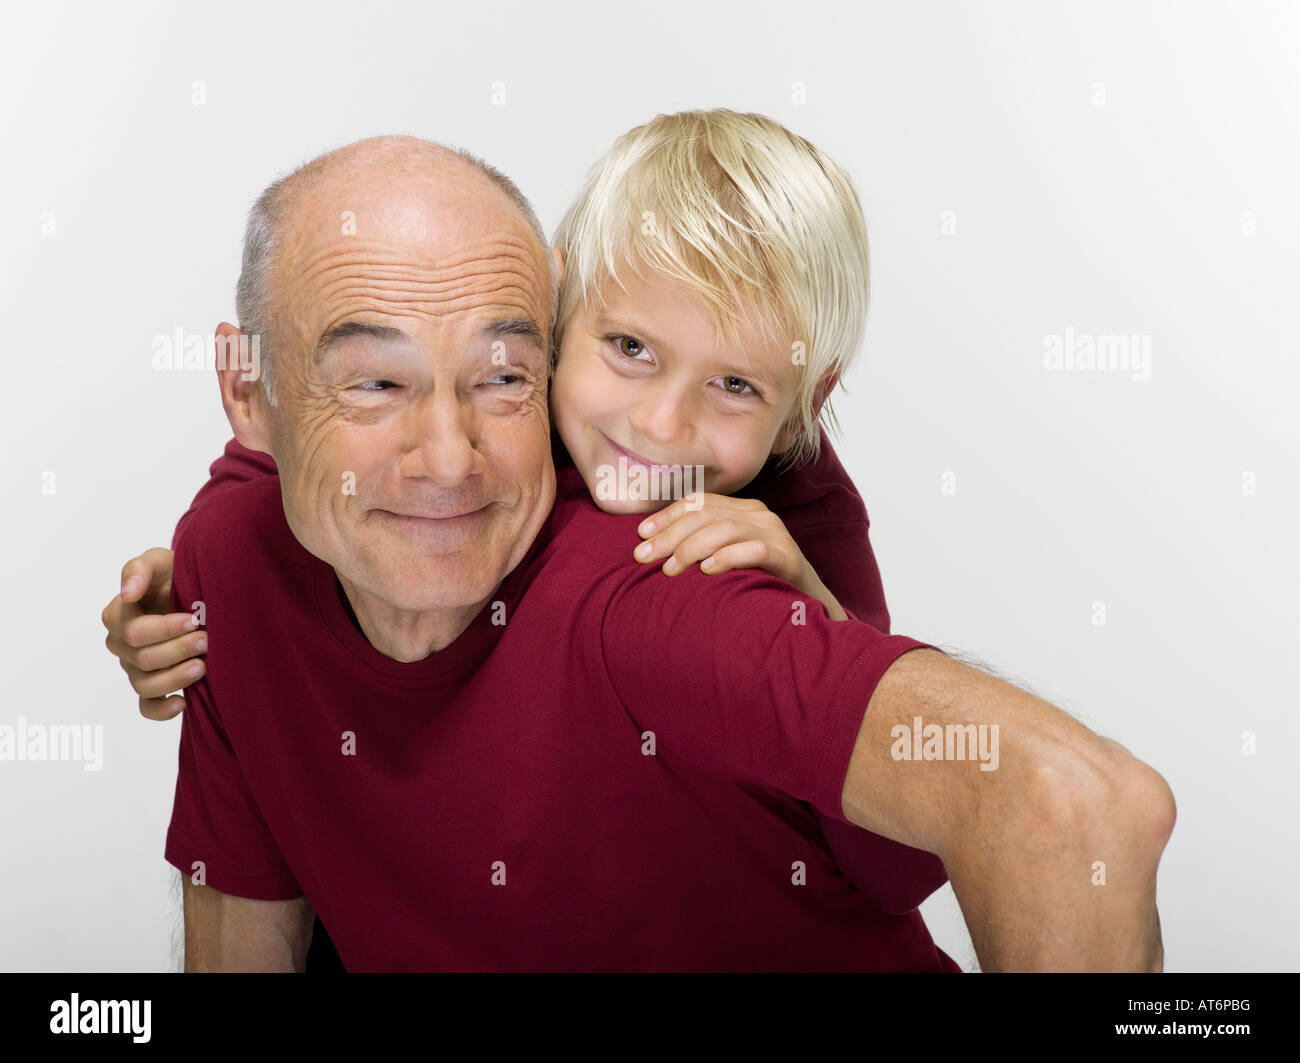 Grandson 8 9 Embracing Grandfather Smiling Portrait Stock Photo Alamy